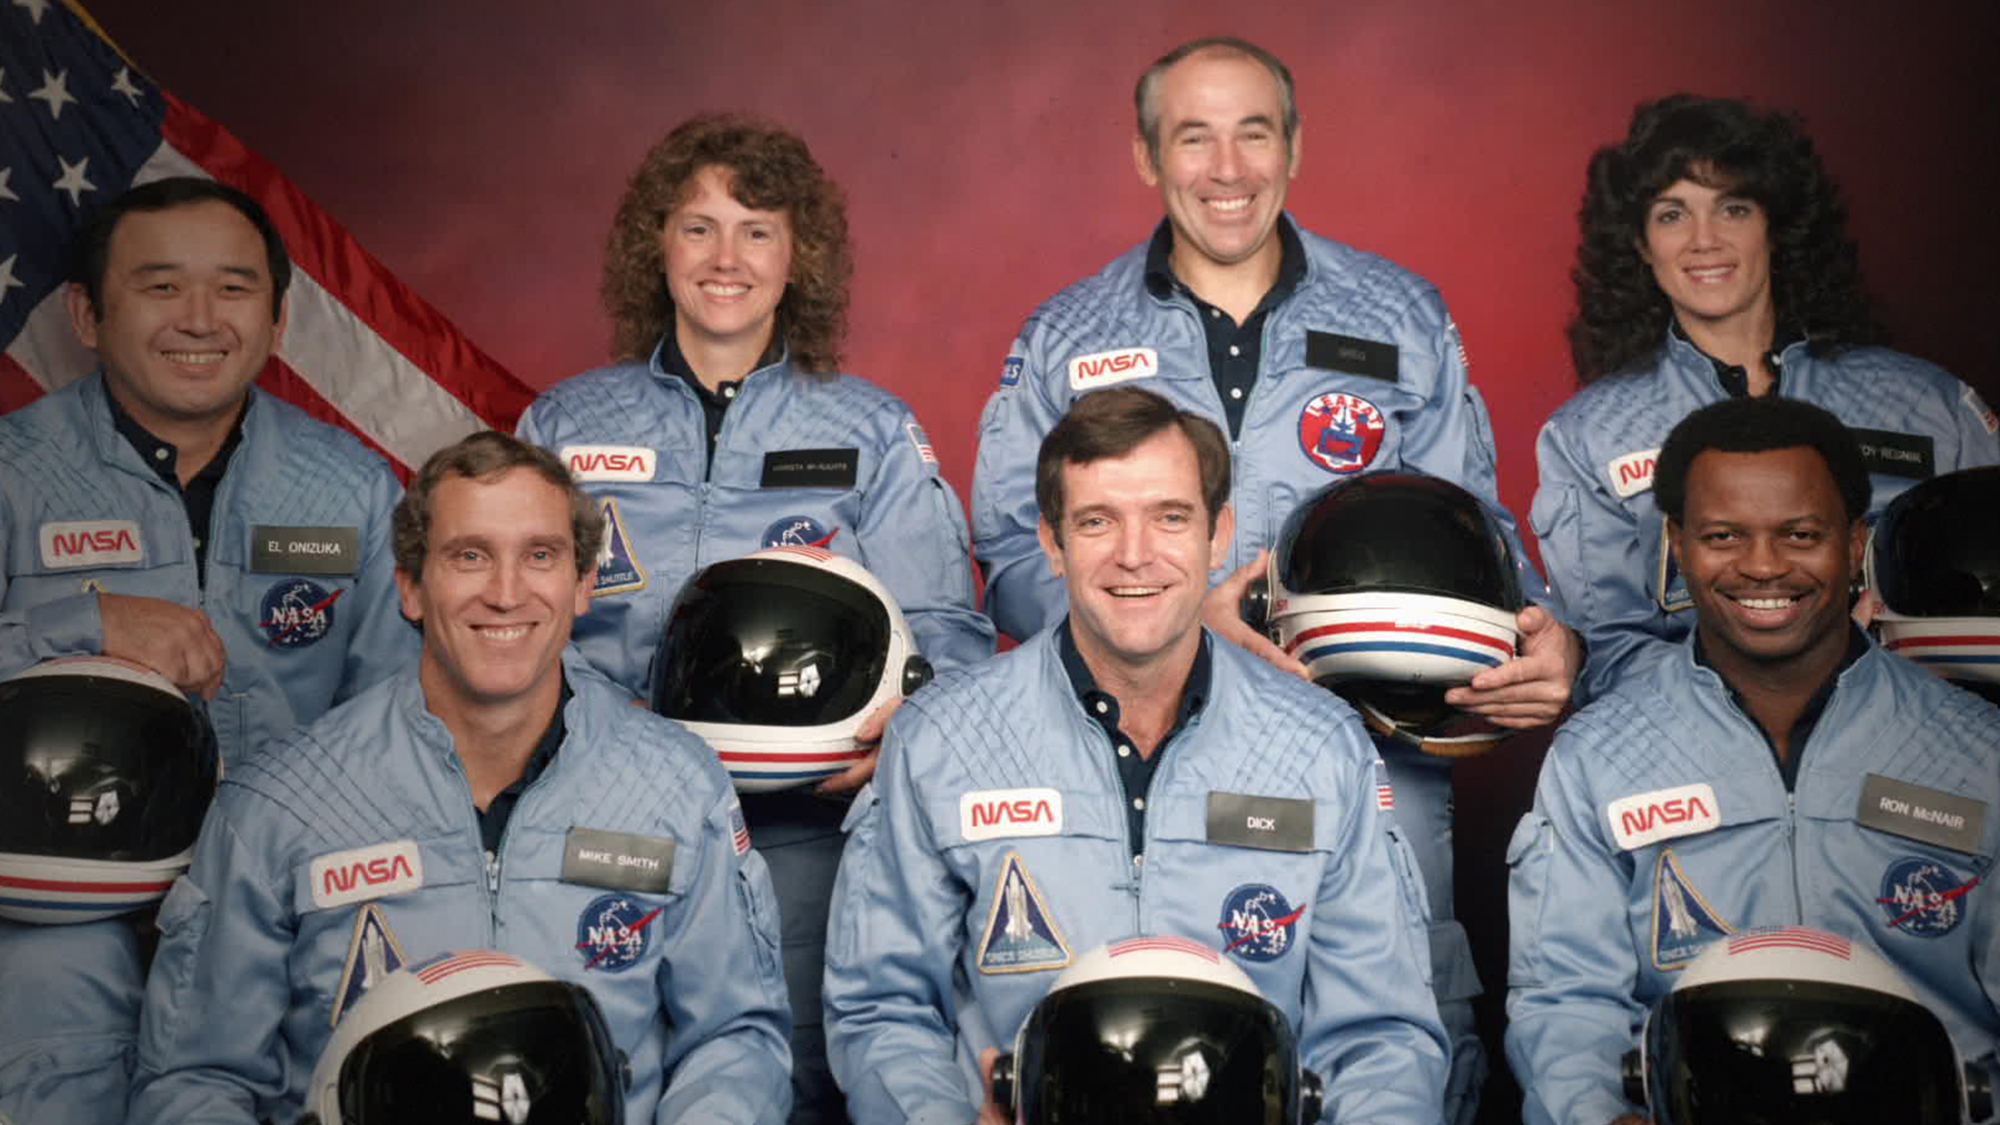 The Challenger 7 flight crew: Ellison S. Onizuka; Mike Smith; Christa McAuliffe; Dick Scobee; Gregory Jarvis; Judith Resnik; and Ronald McNair.